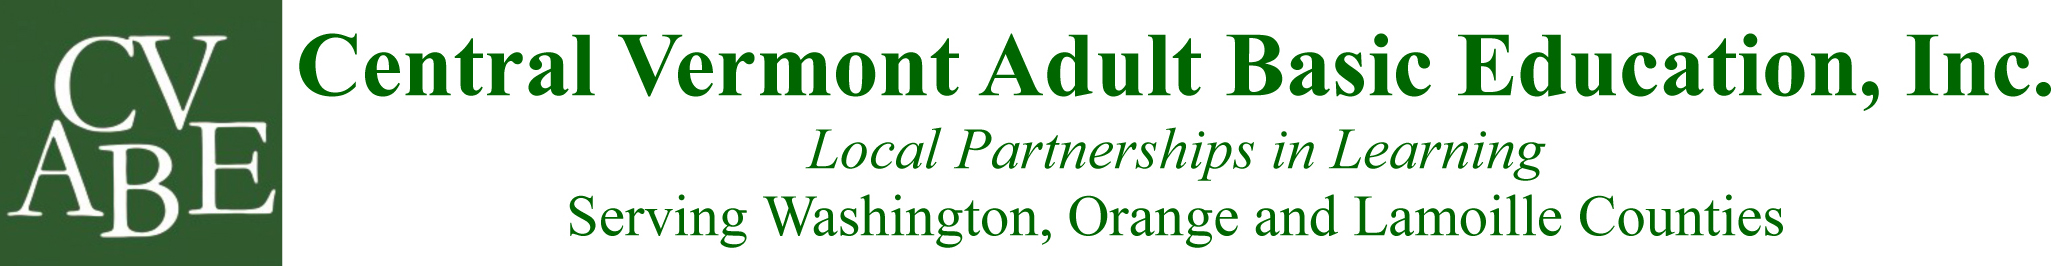 Central Vermont Adult Basic Education logo